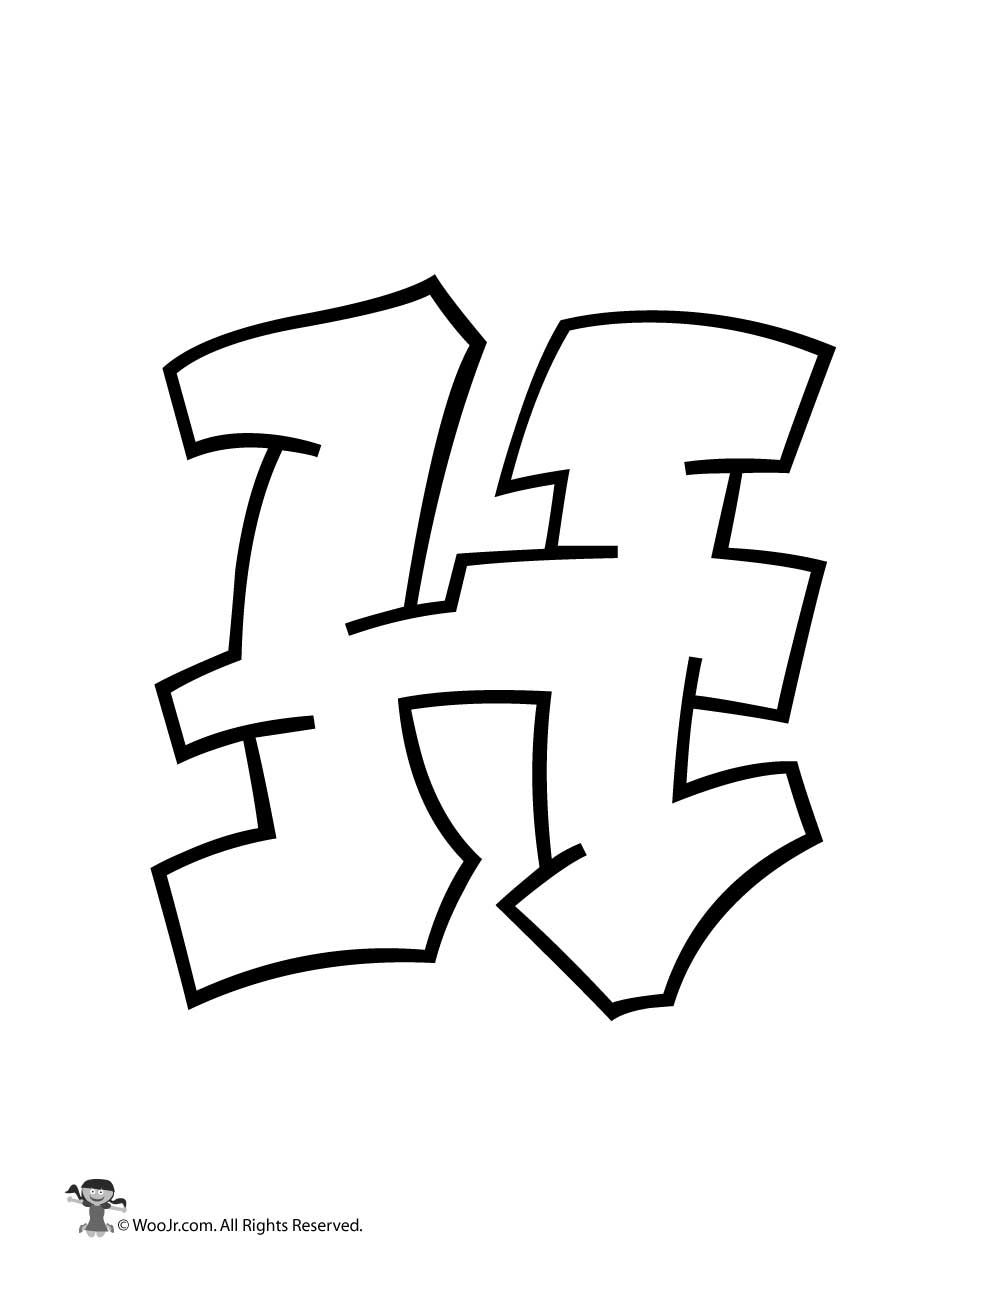 Буква h в стиле граффити